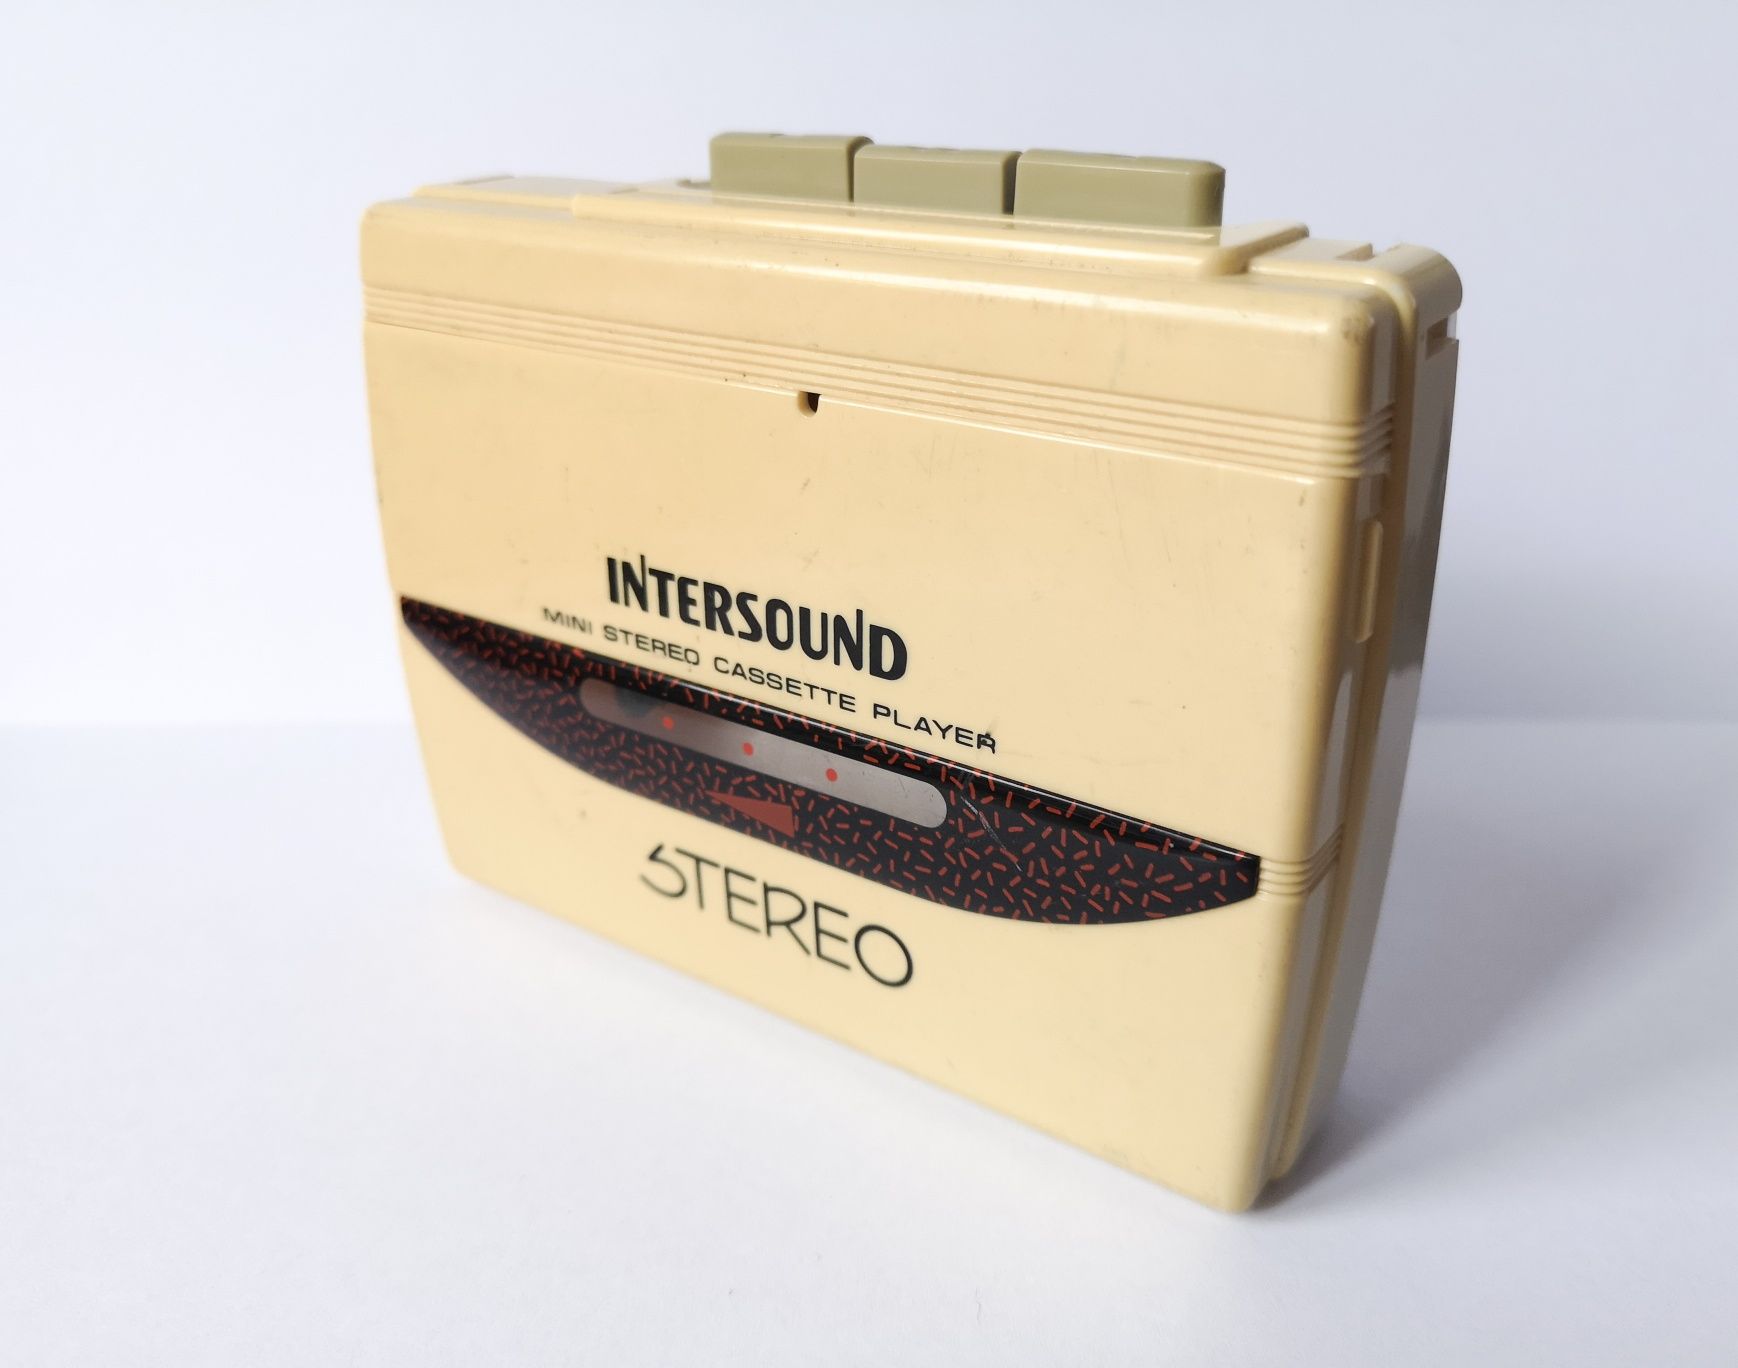 Walkman Intersound Stereo